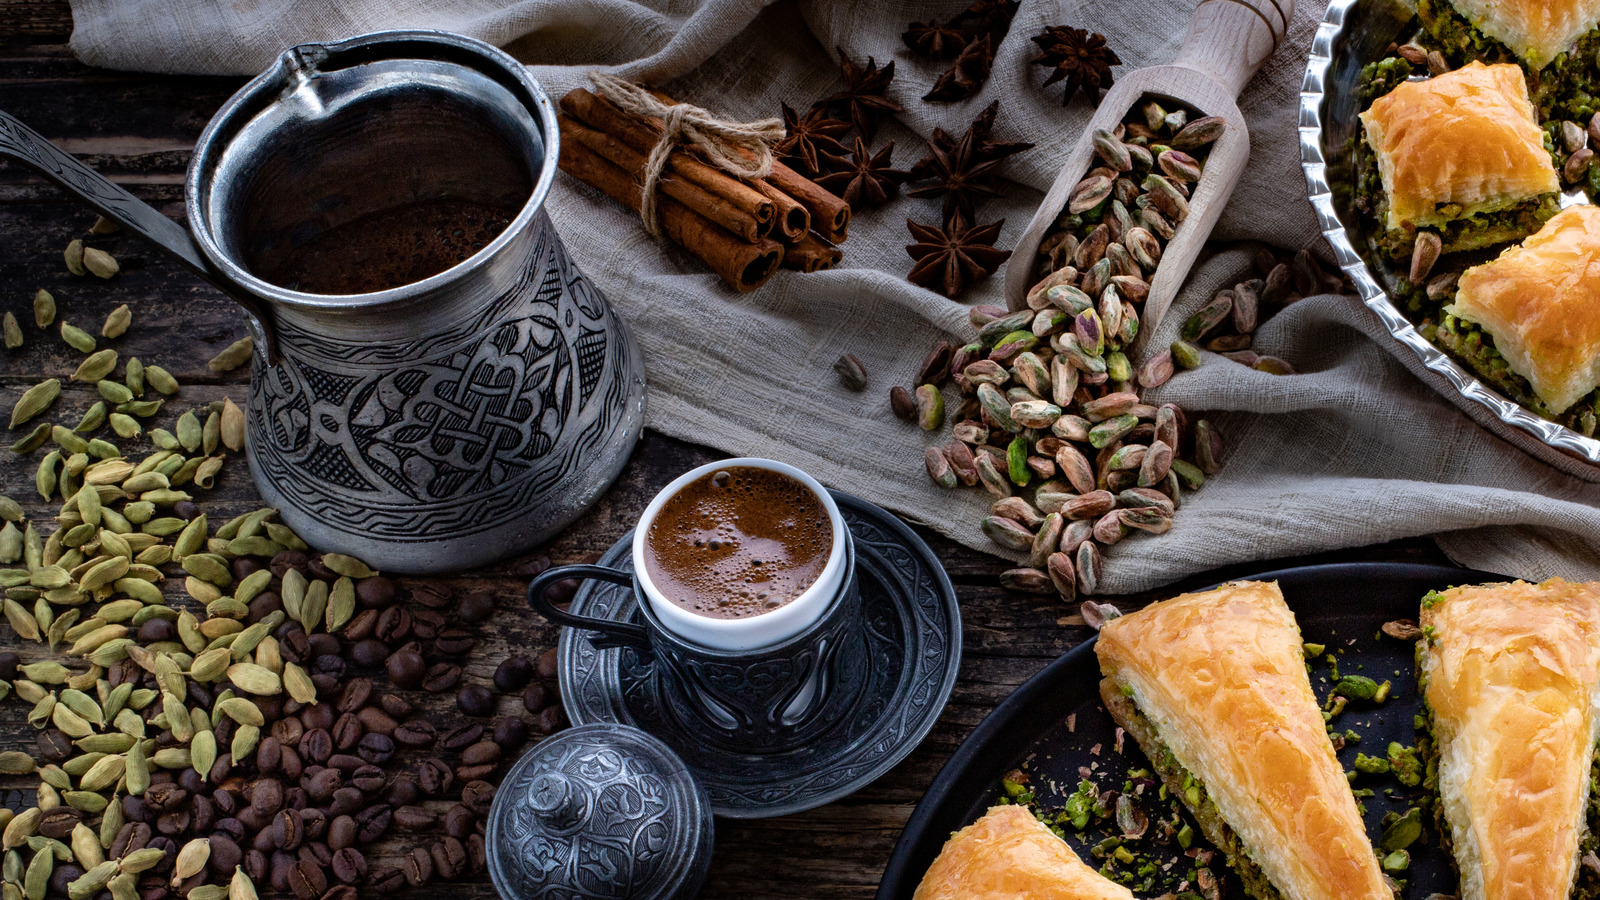 The preparation method that makes Greek coffee unique